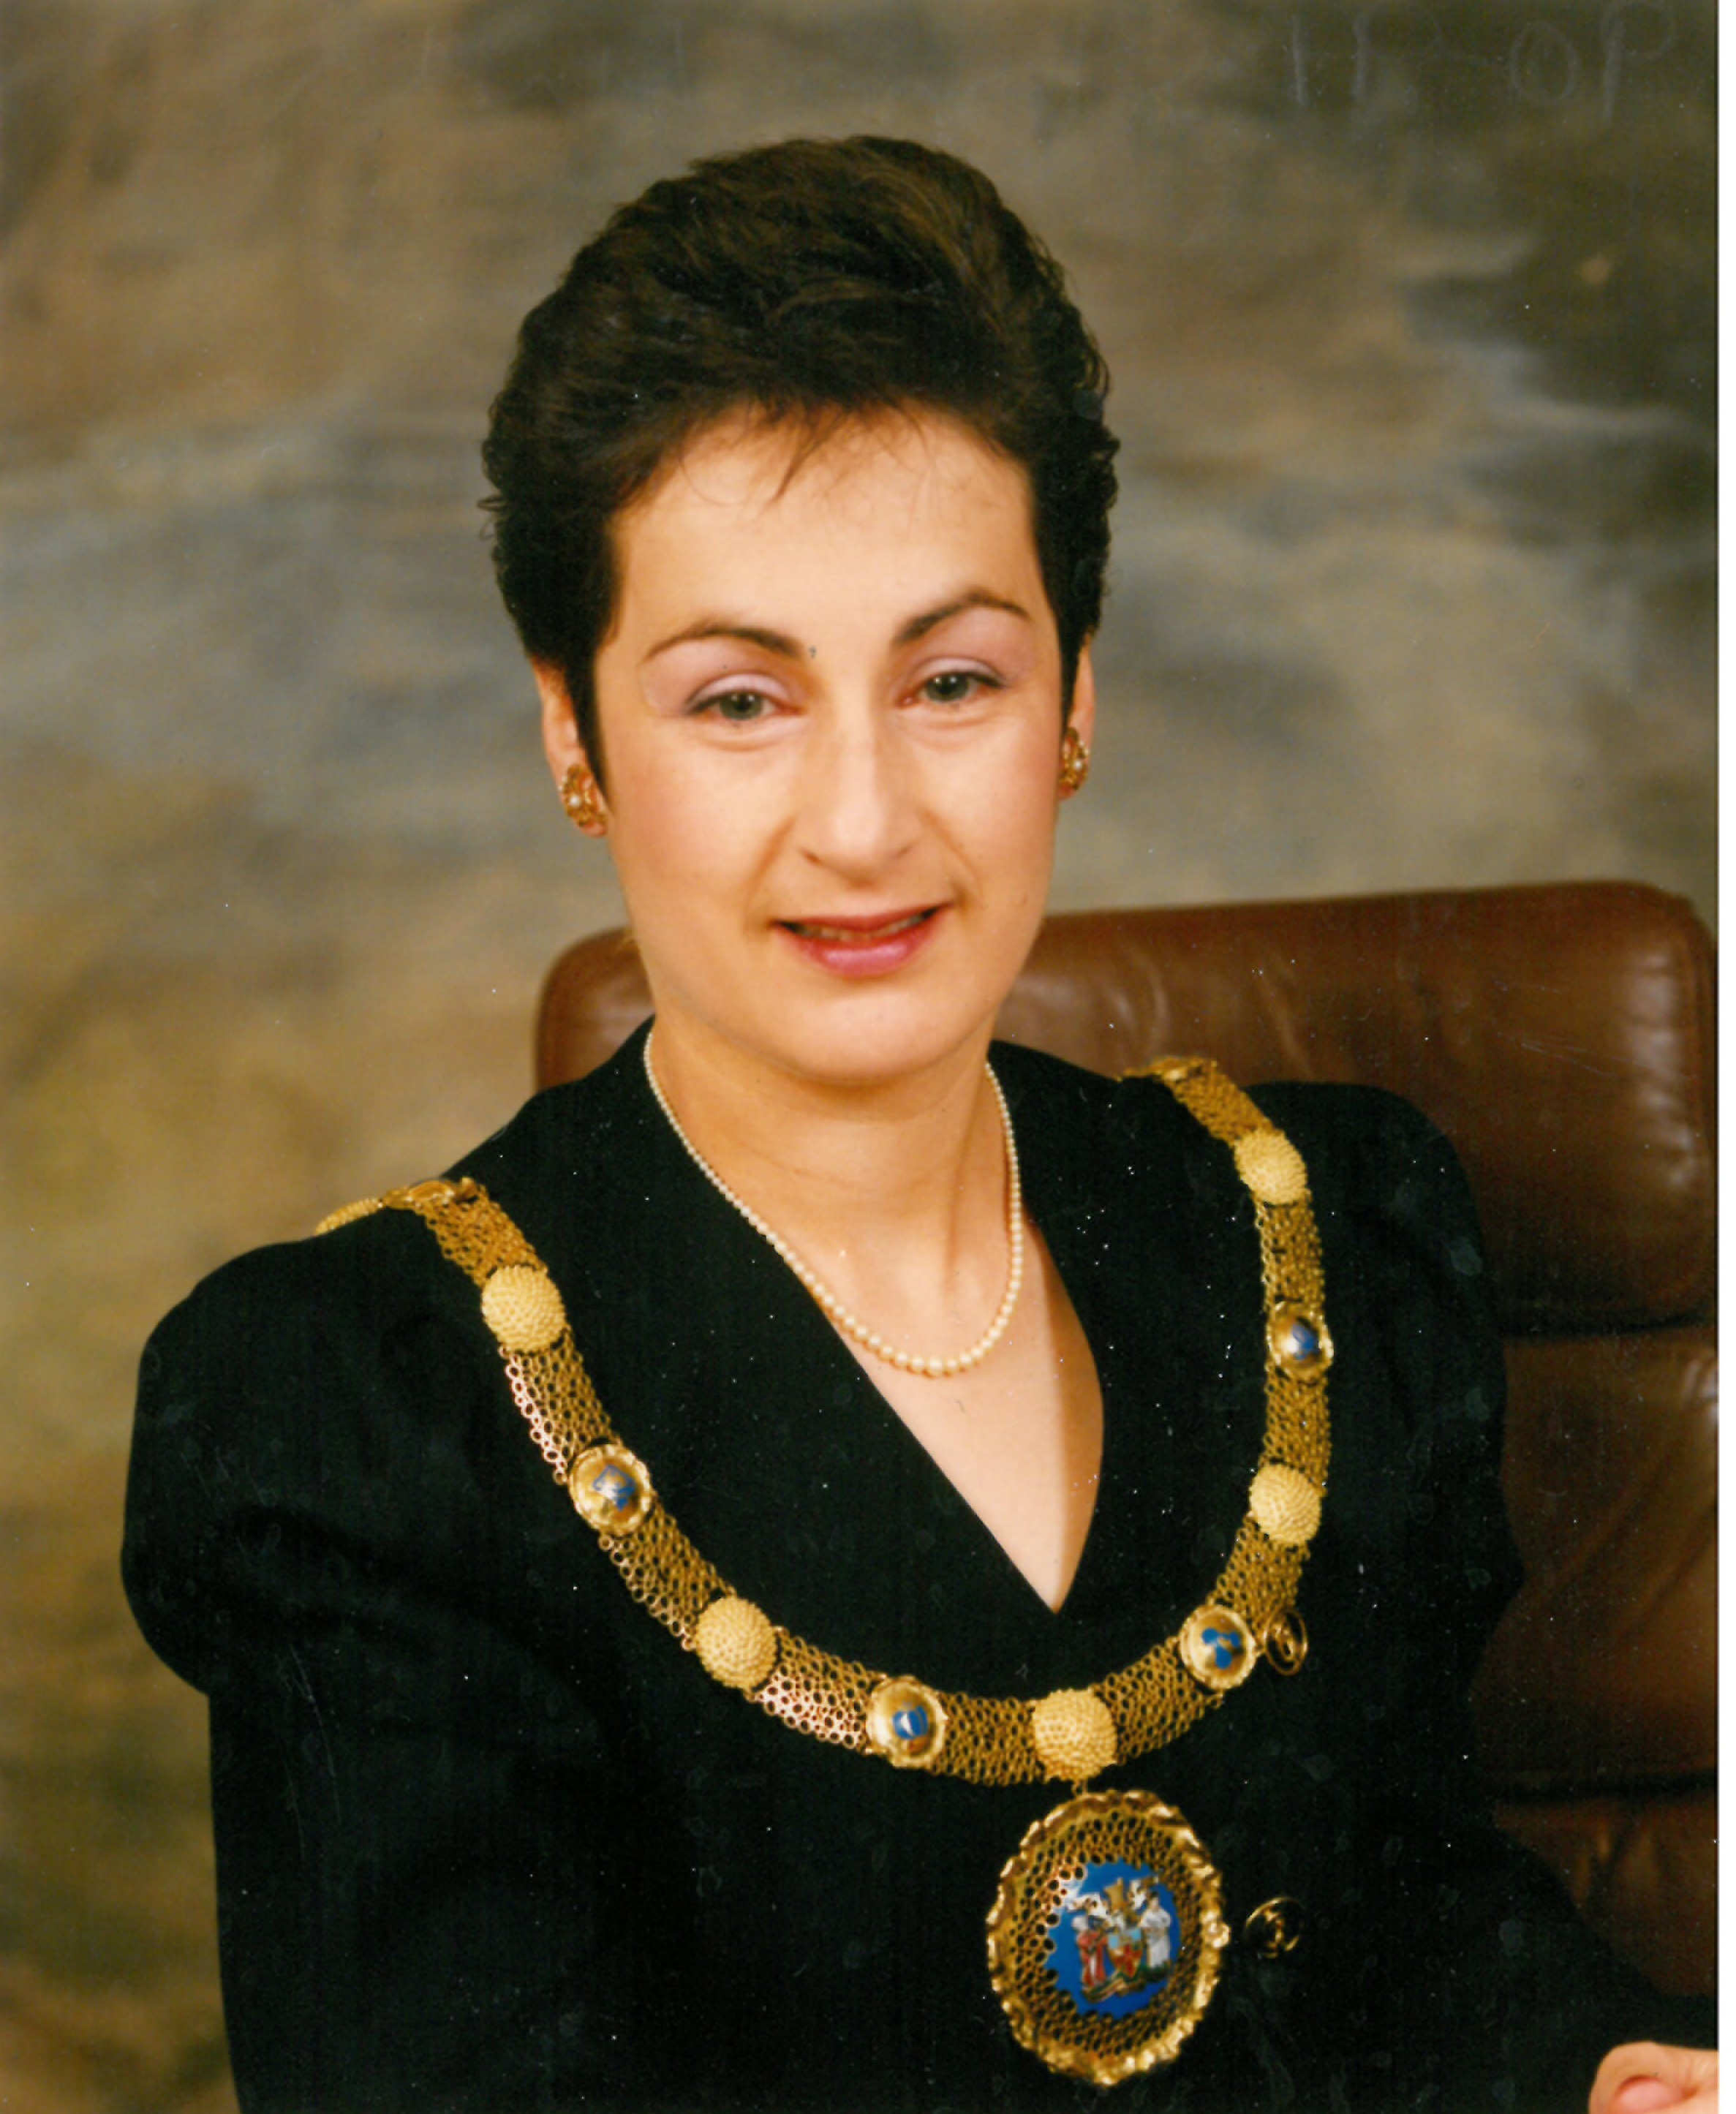 LDRPS:2004.7.14 Linda Stone, President of the Royal Pharmaceutical Society, 1990-1991